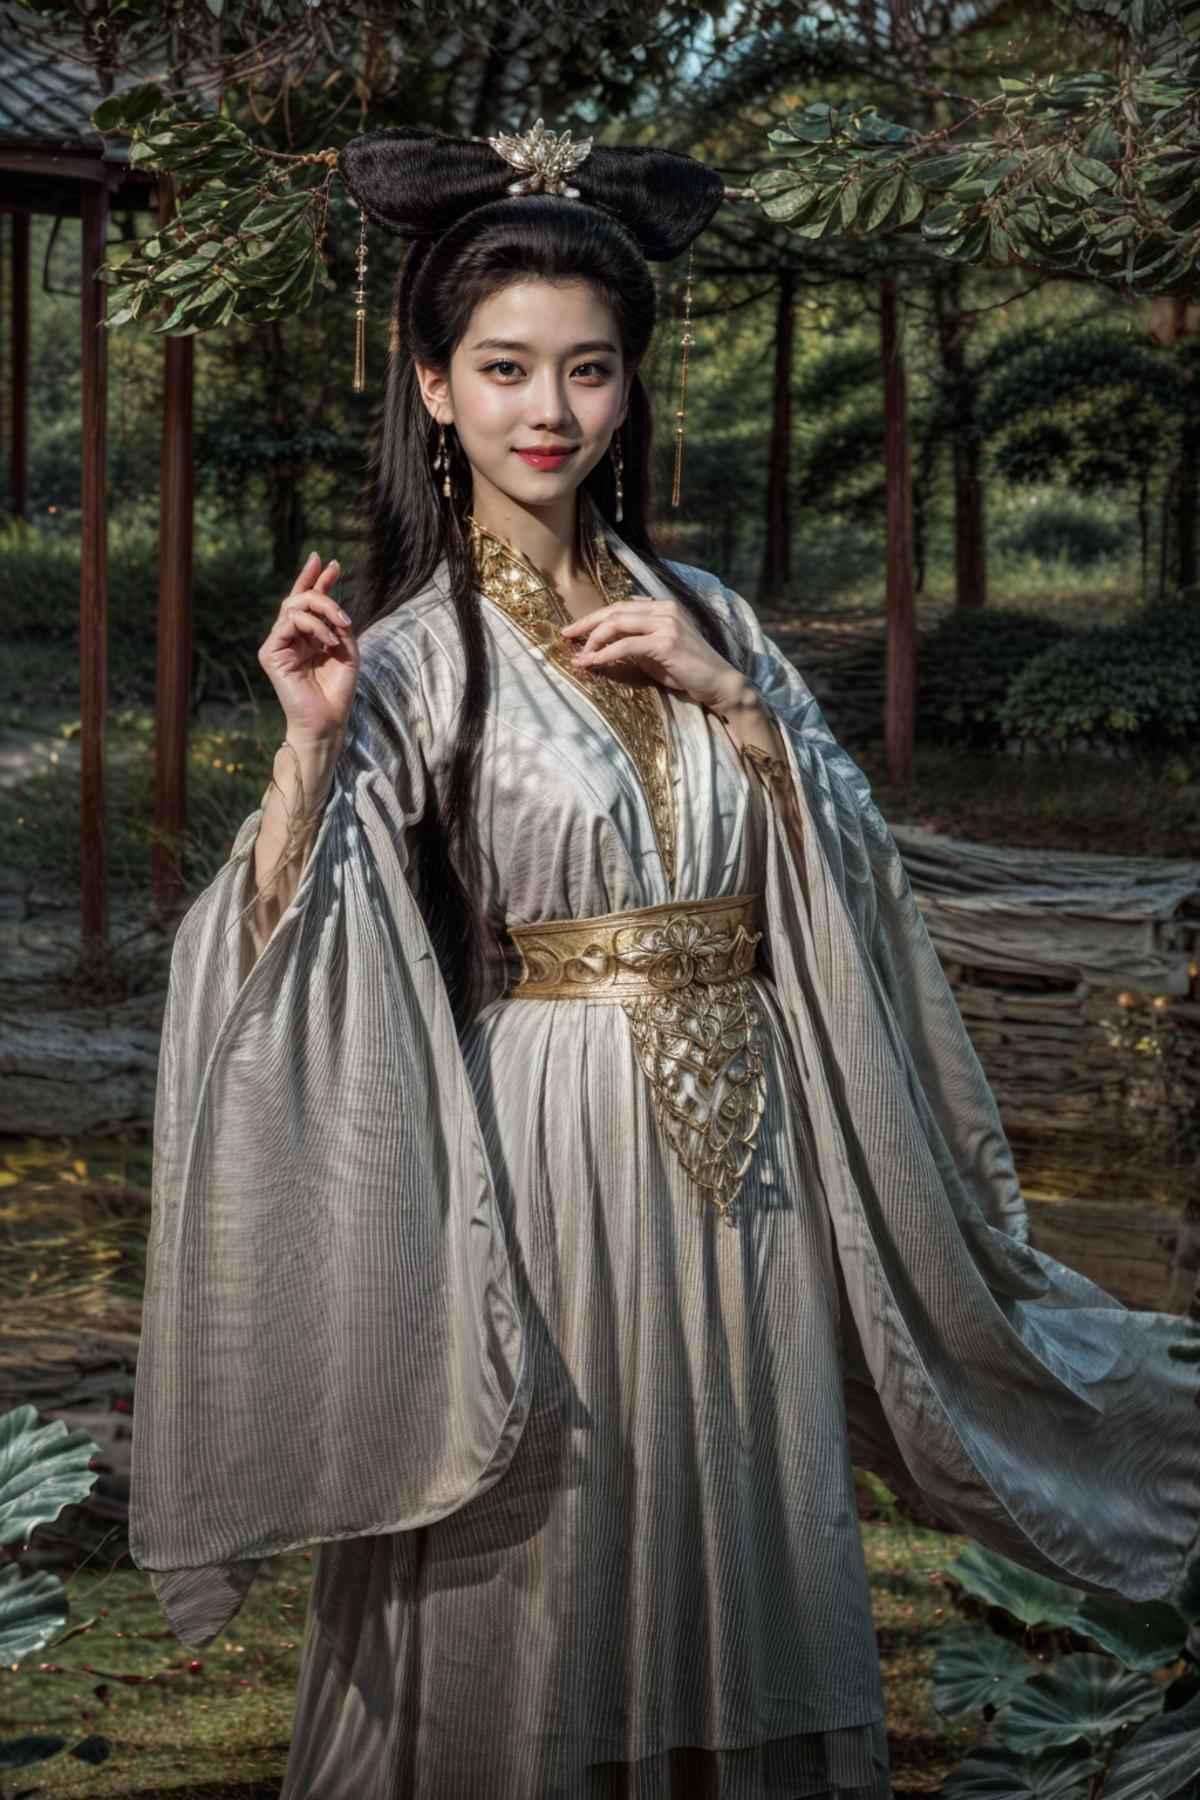 白素贞 Bai Suzhen | 白蛇传 Legend of the White Snake | 中国神话系列 Chinese mythology image by yoyochen2023